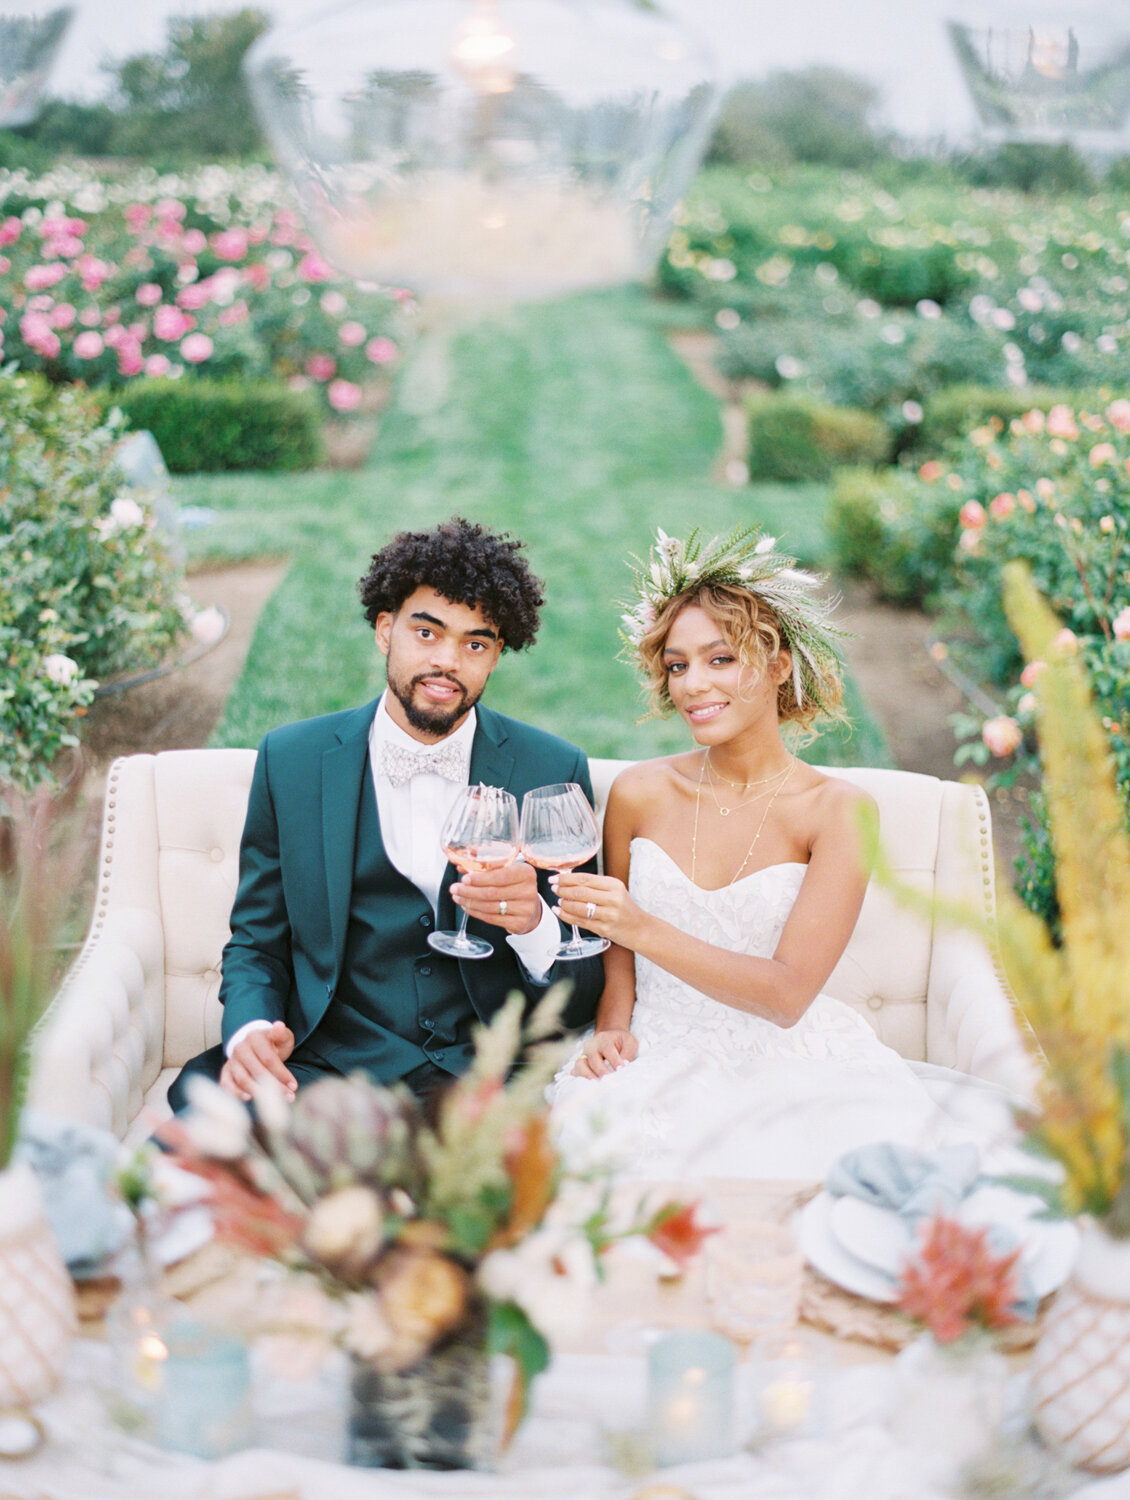 wisteria-photography.com | Wisteria Photography | Intimate Rose Garden Wedding | Santa Ynez | Featured on Green Wedding Shoes | Southern California Photographer-52.jpg